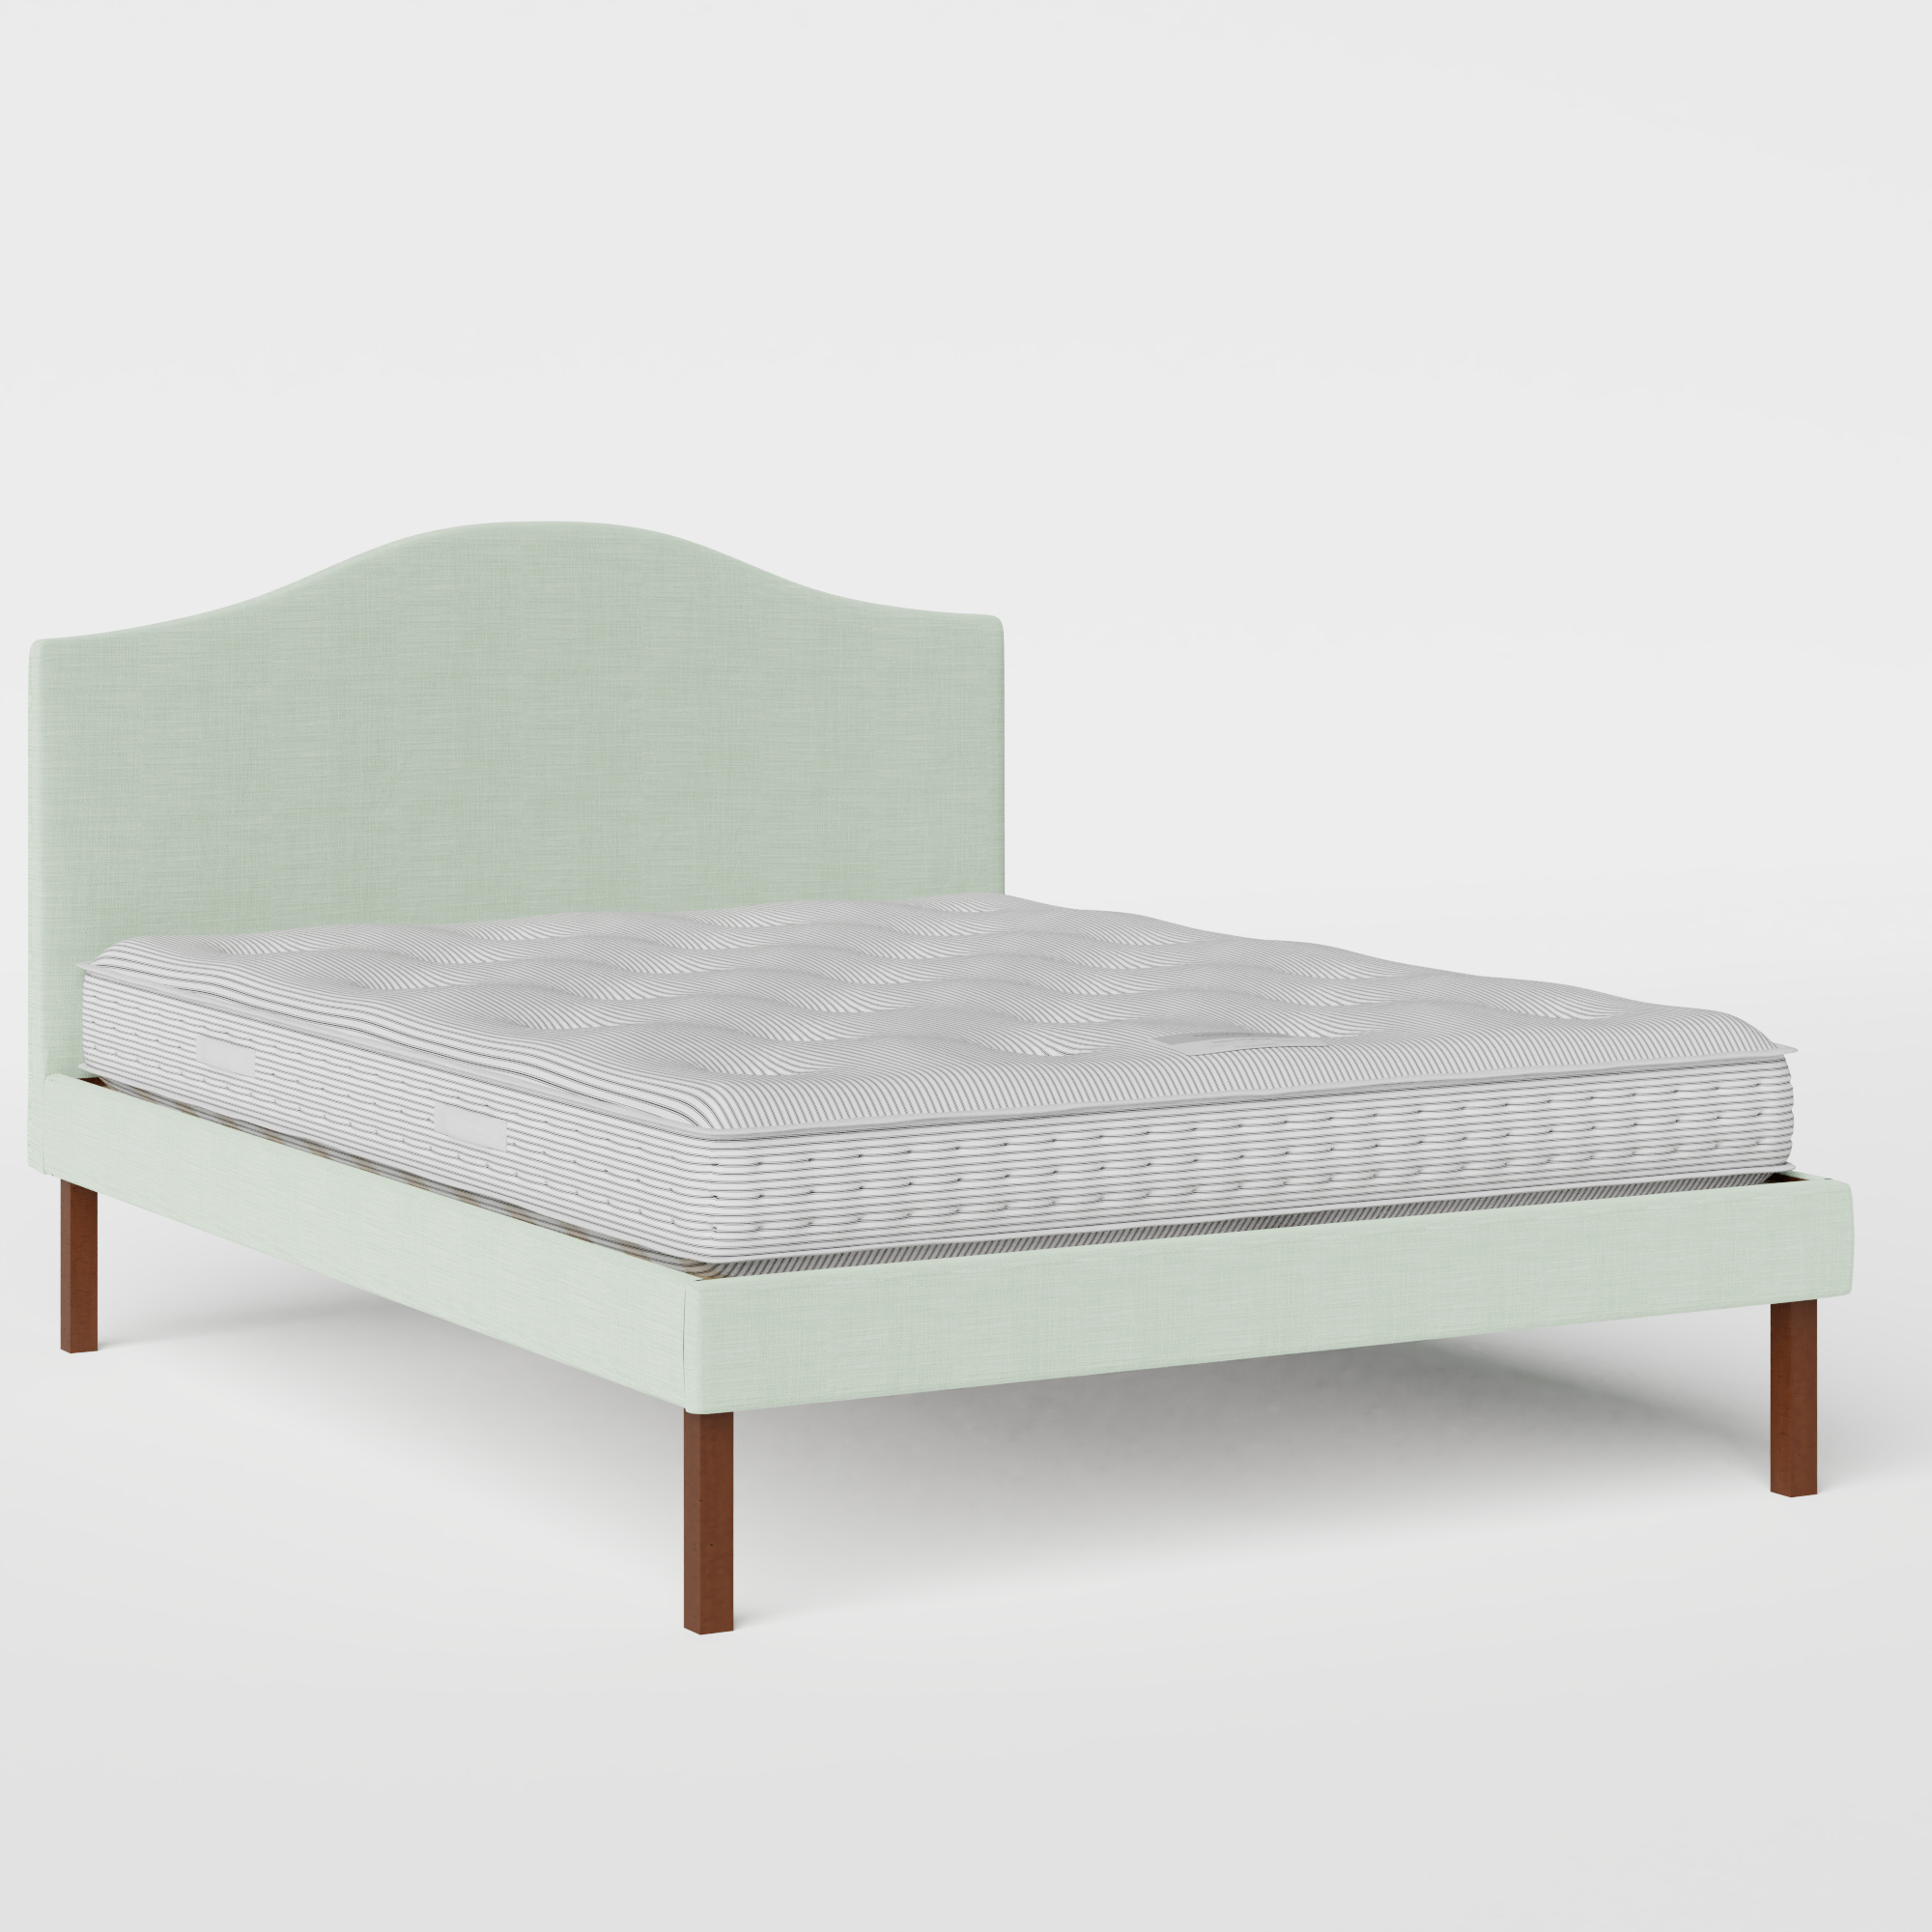 Yoshida Upholstered upholstered bed in duckegg fabric